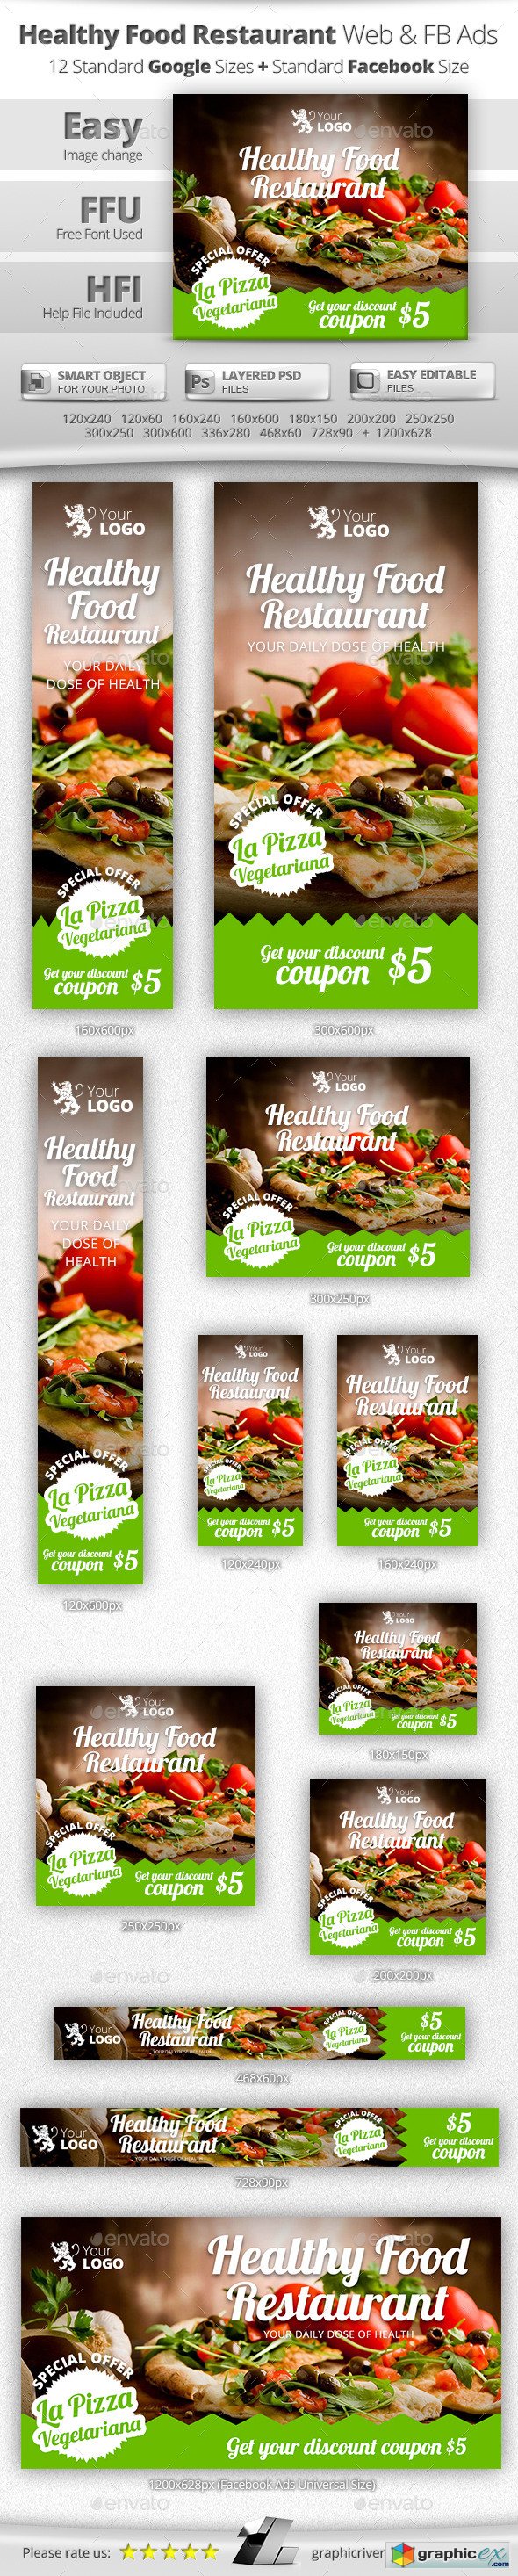 Healthy Restaurant Web & Facebook Banners Ads